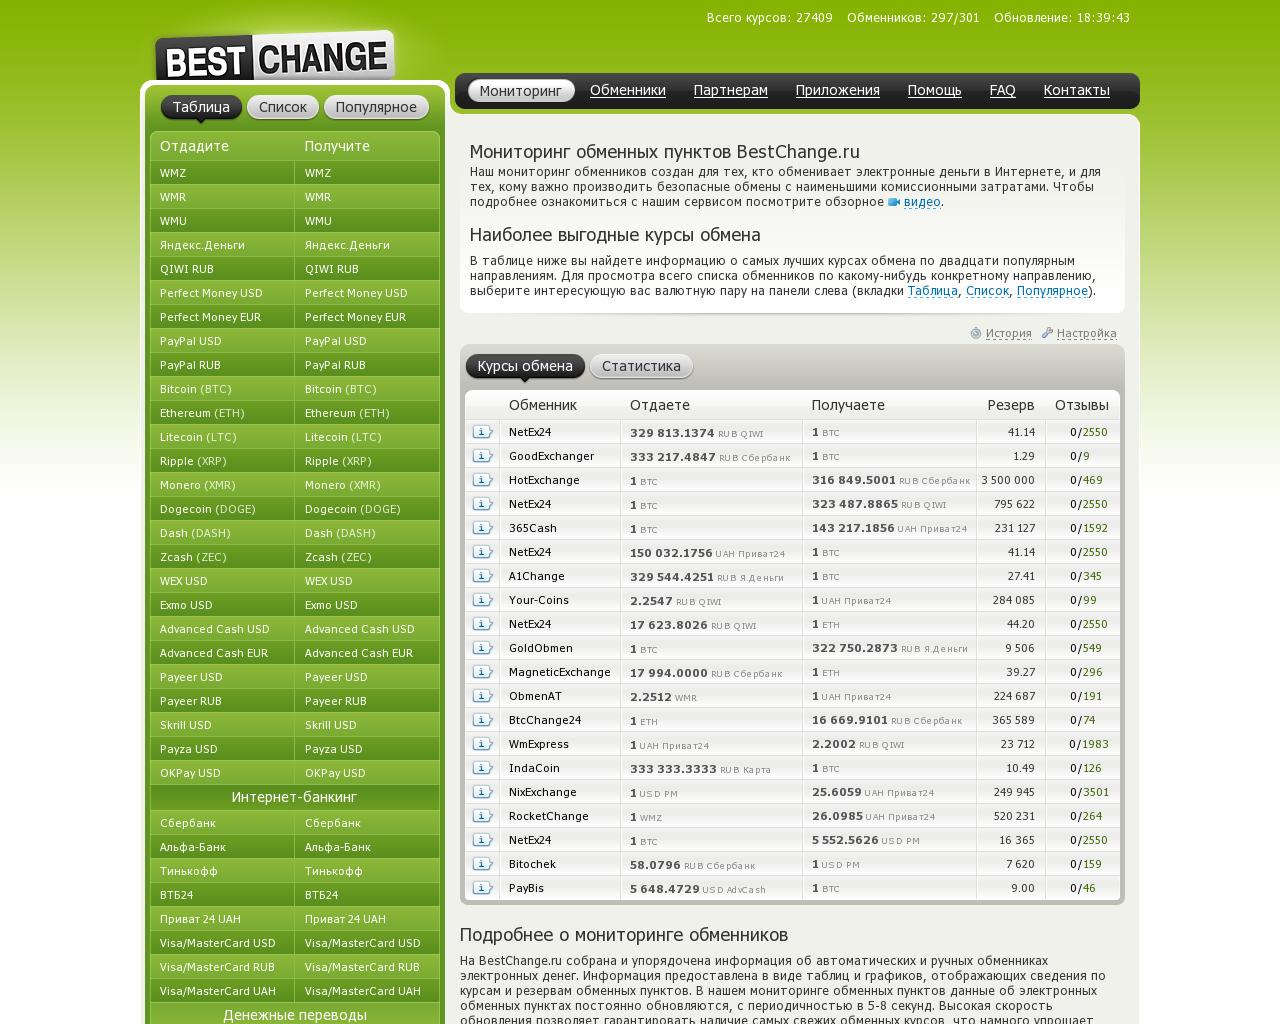 Изображение сайта best-changes.ru в разрешении 1280x1024